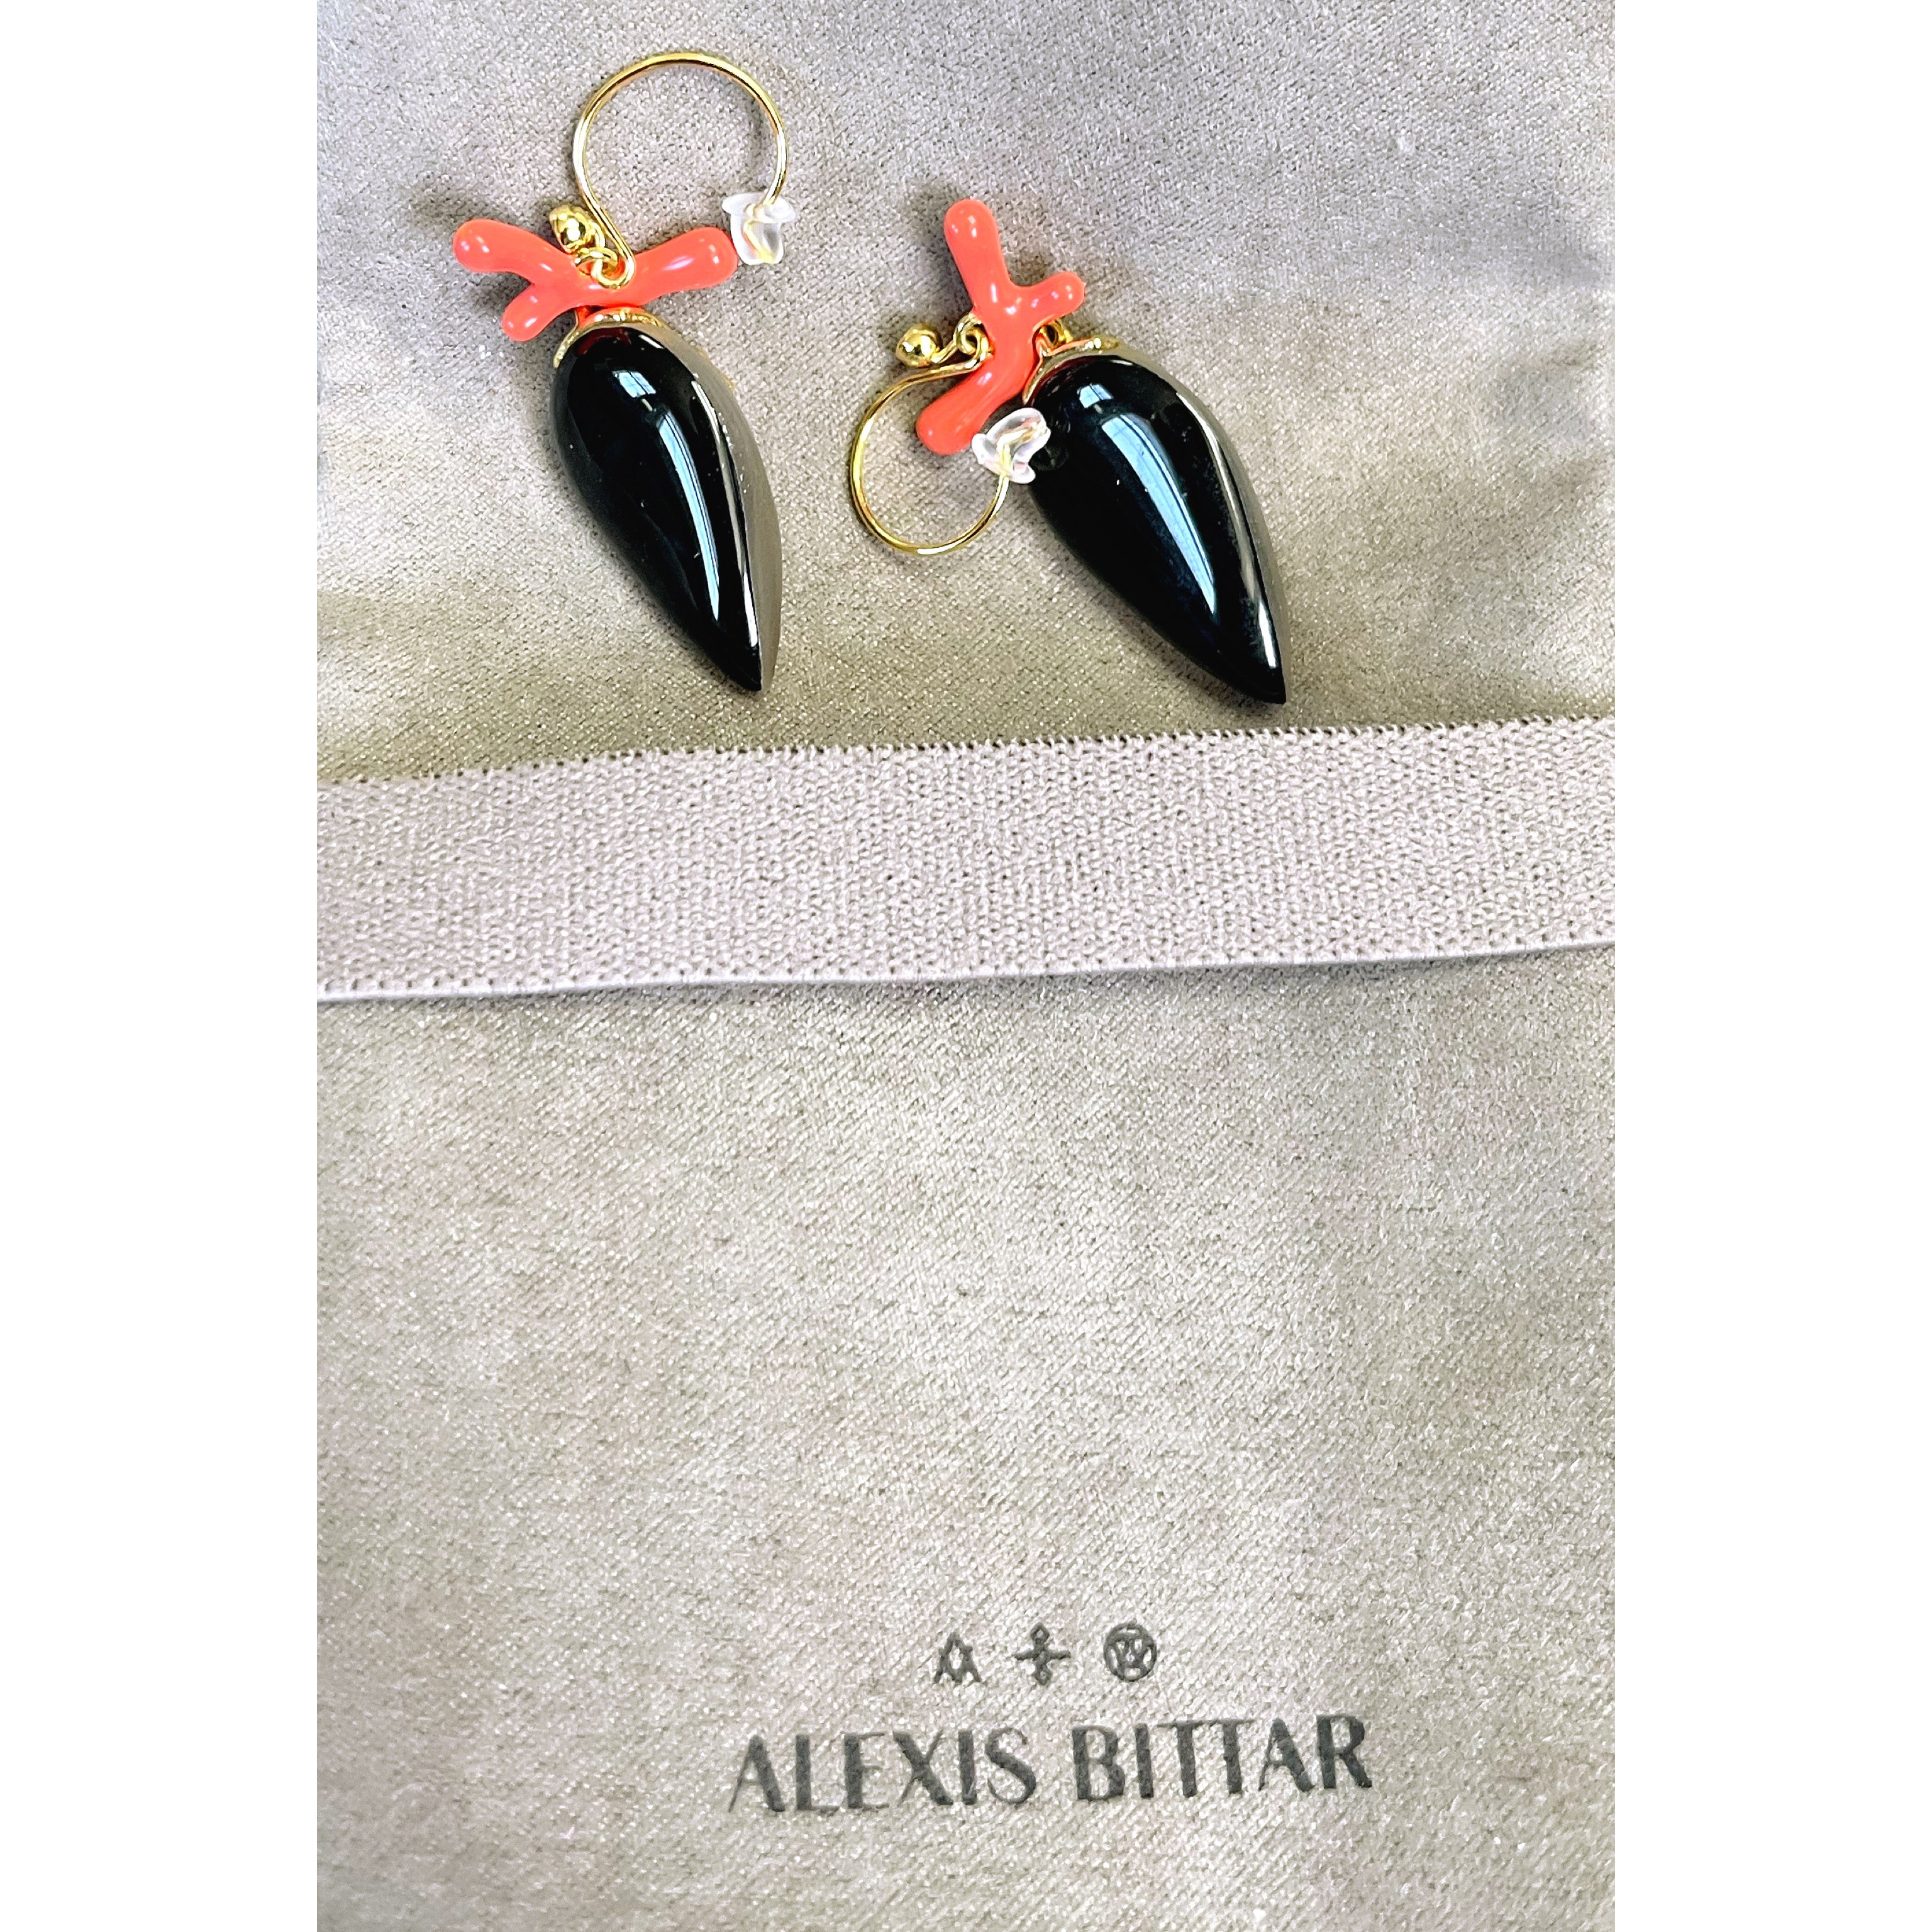 Alexis Bittar Aquatic Dreams coral & lucite earrings